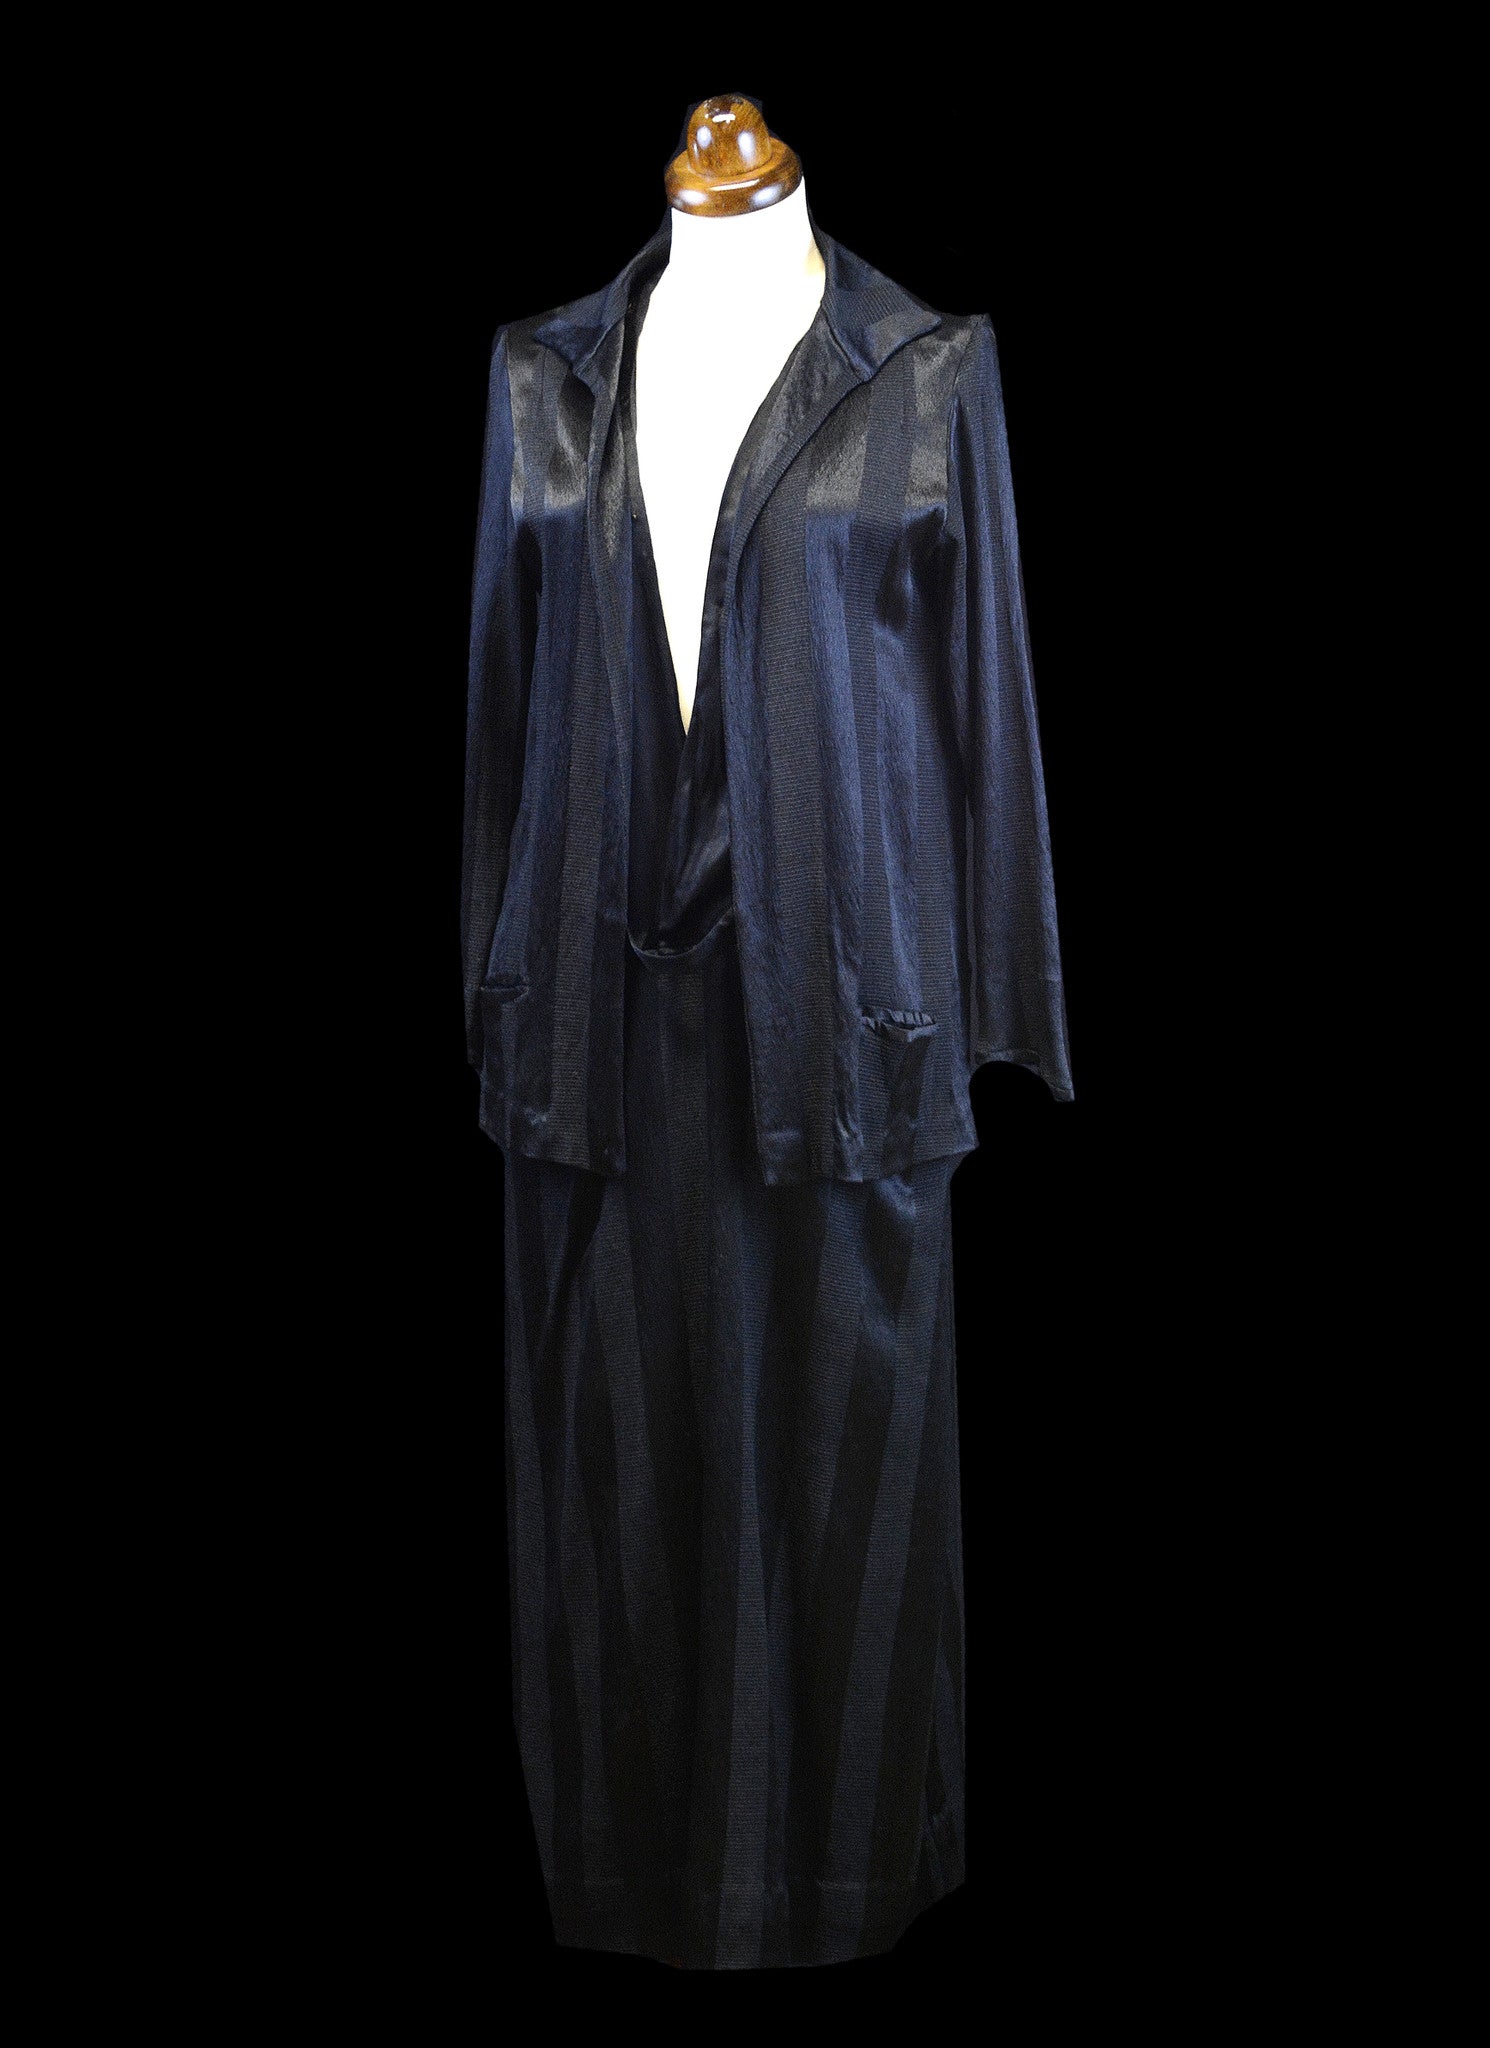 Vintage 1920s Black Crepe Satin Dress